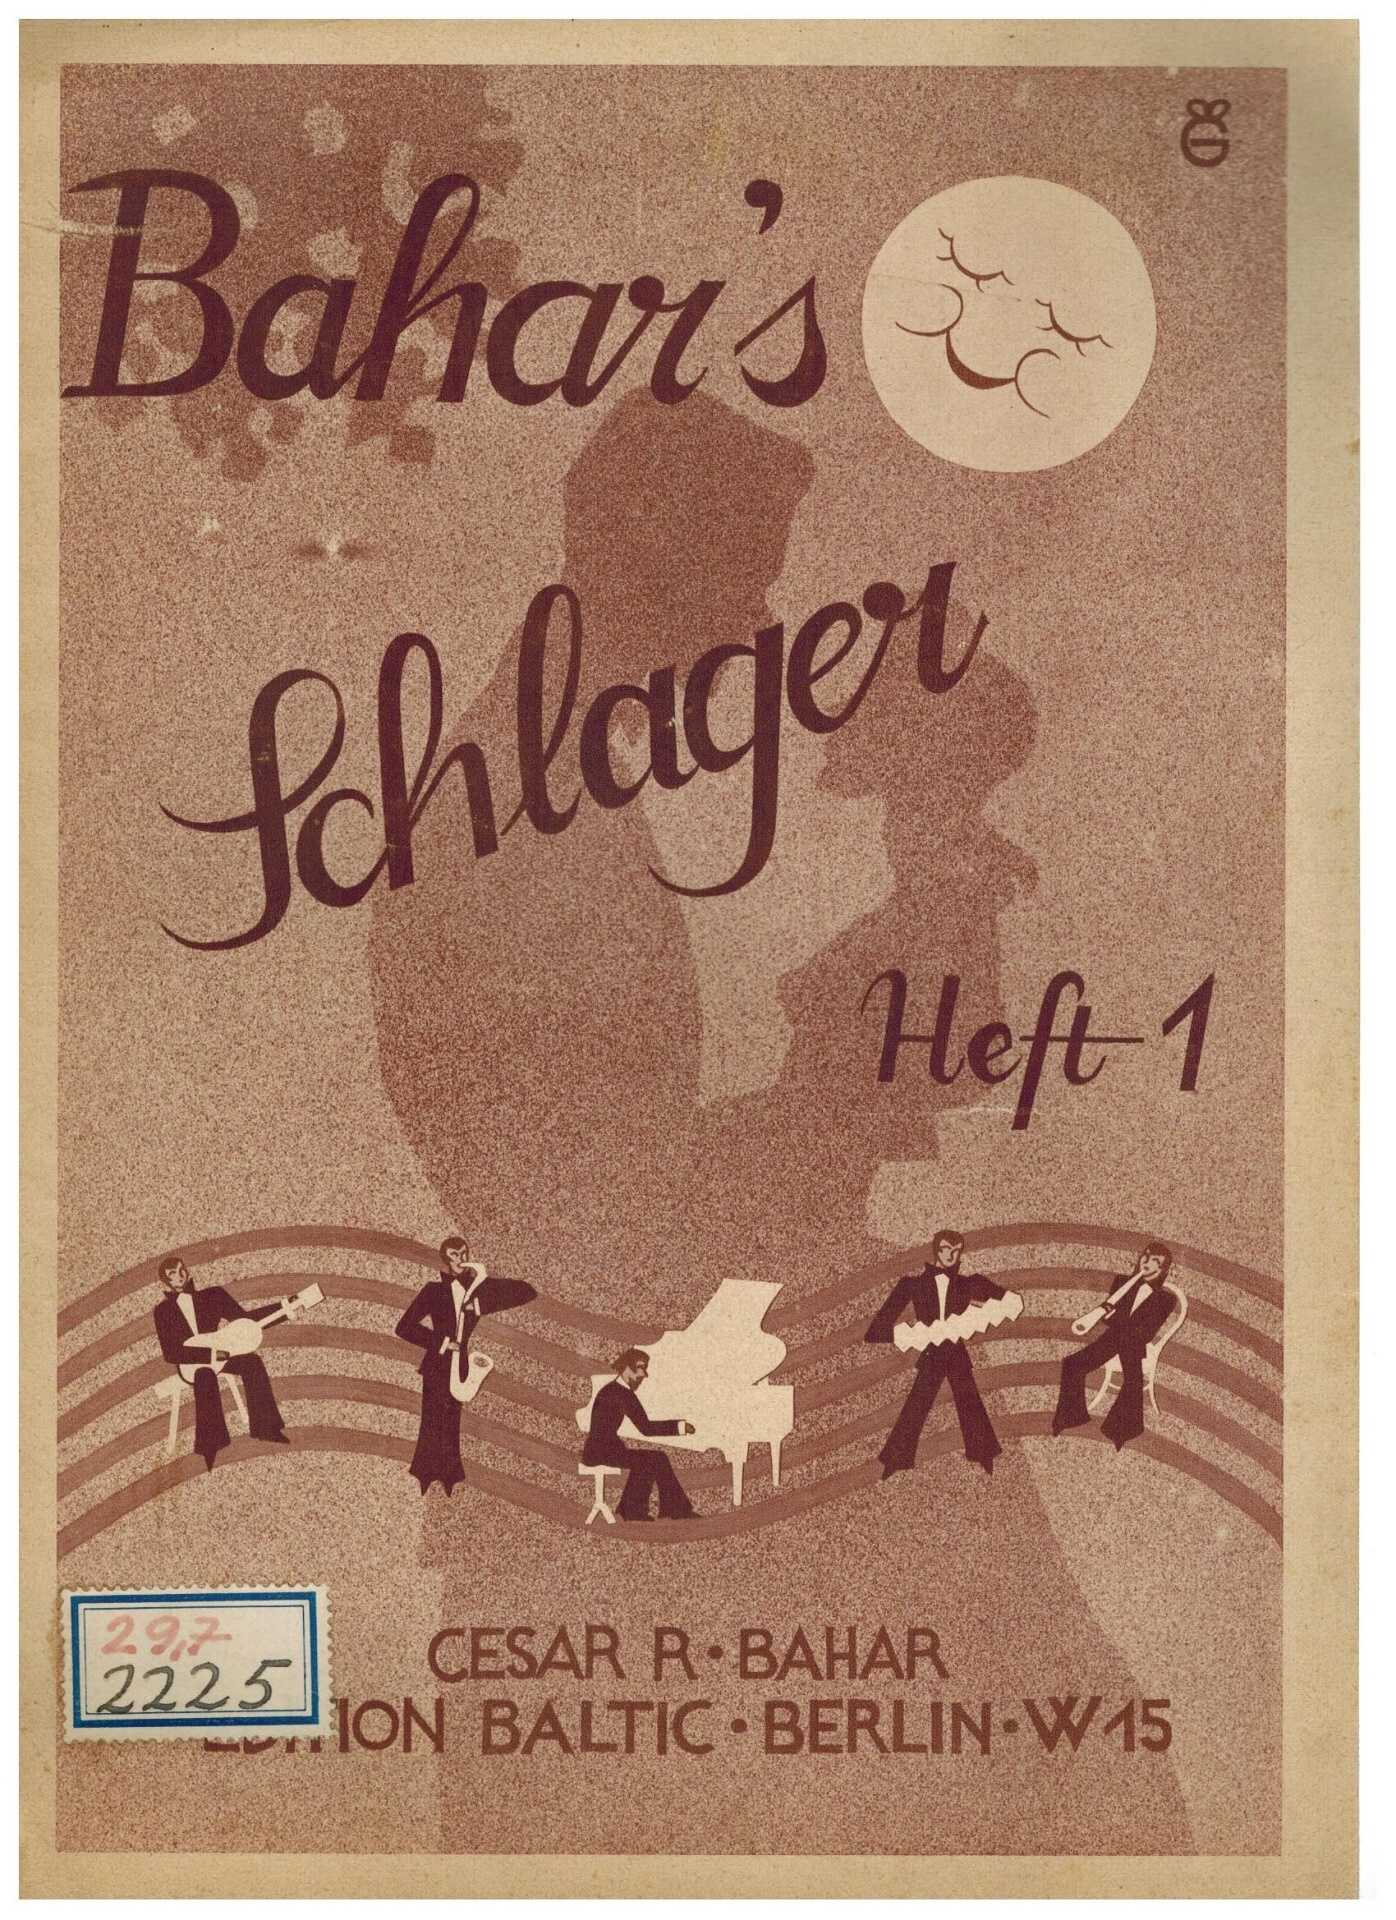 BAHARS SCHLAGER